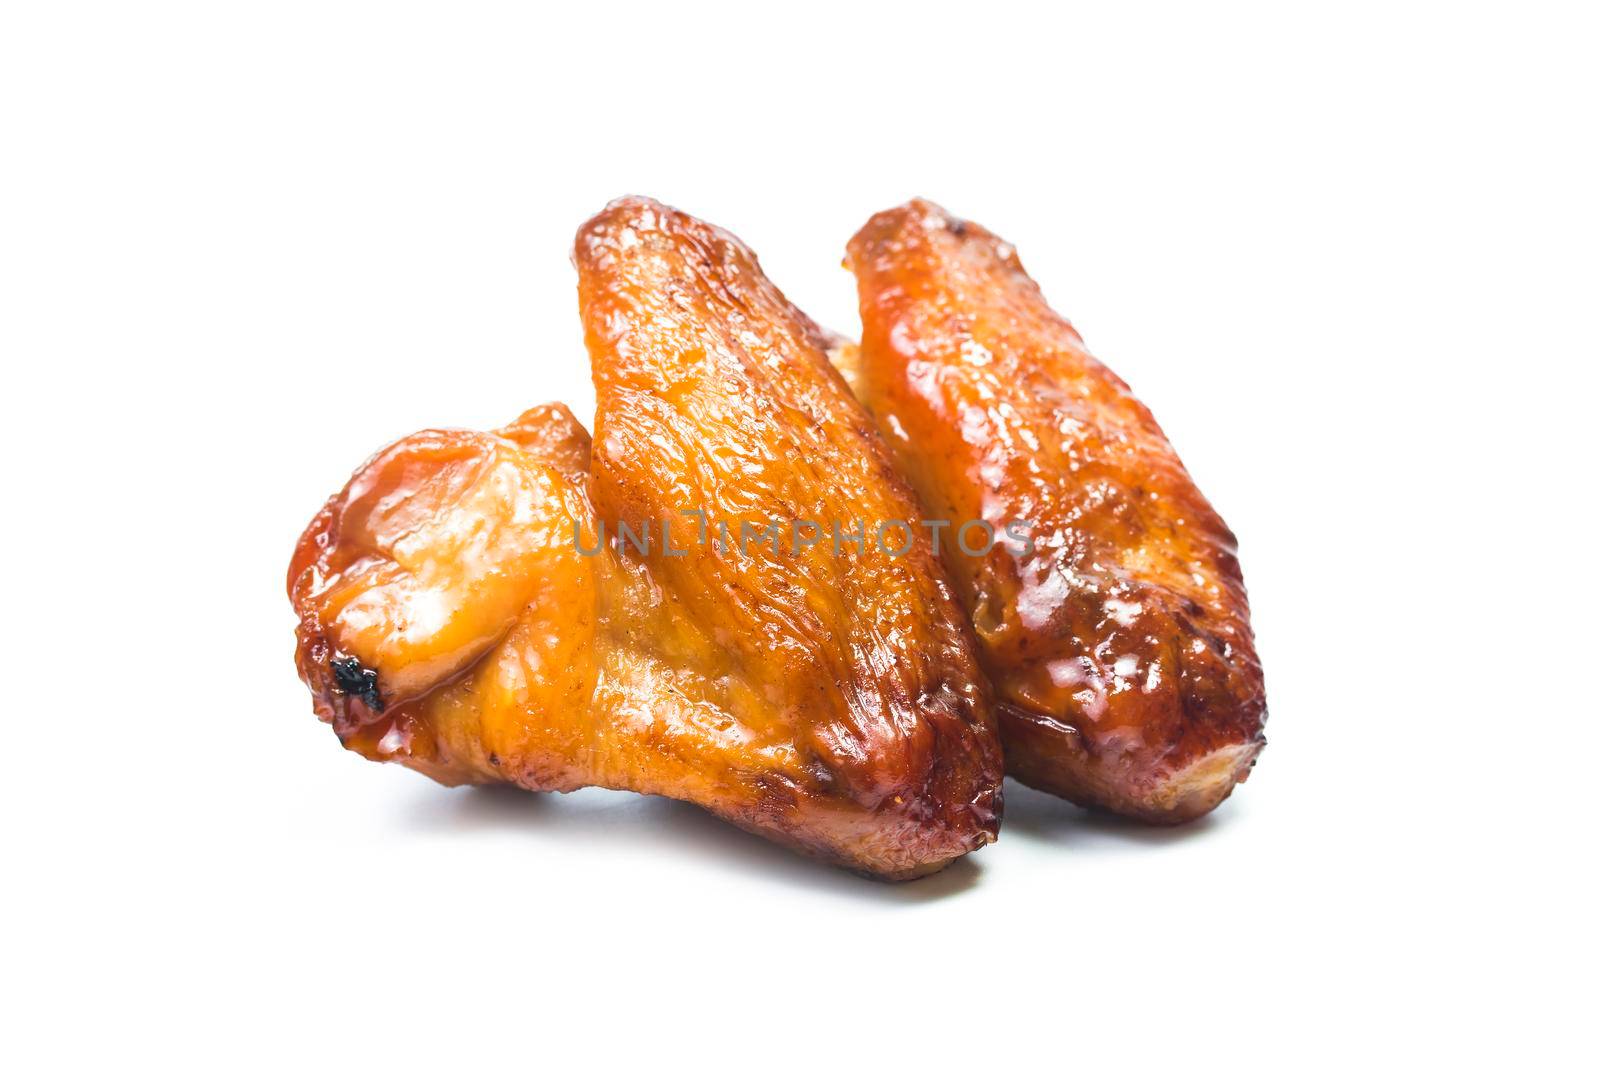 Grilled chicken wings by mihavincadani